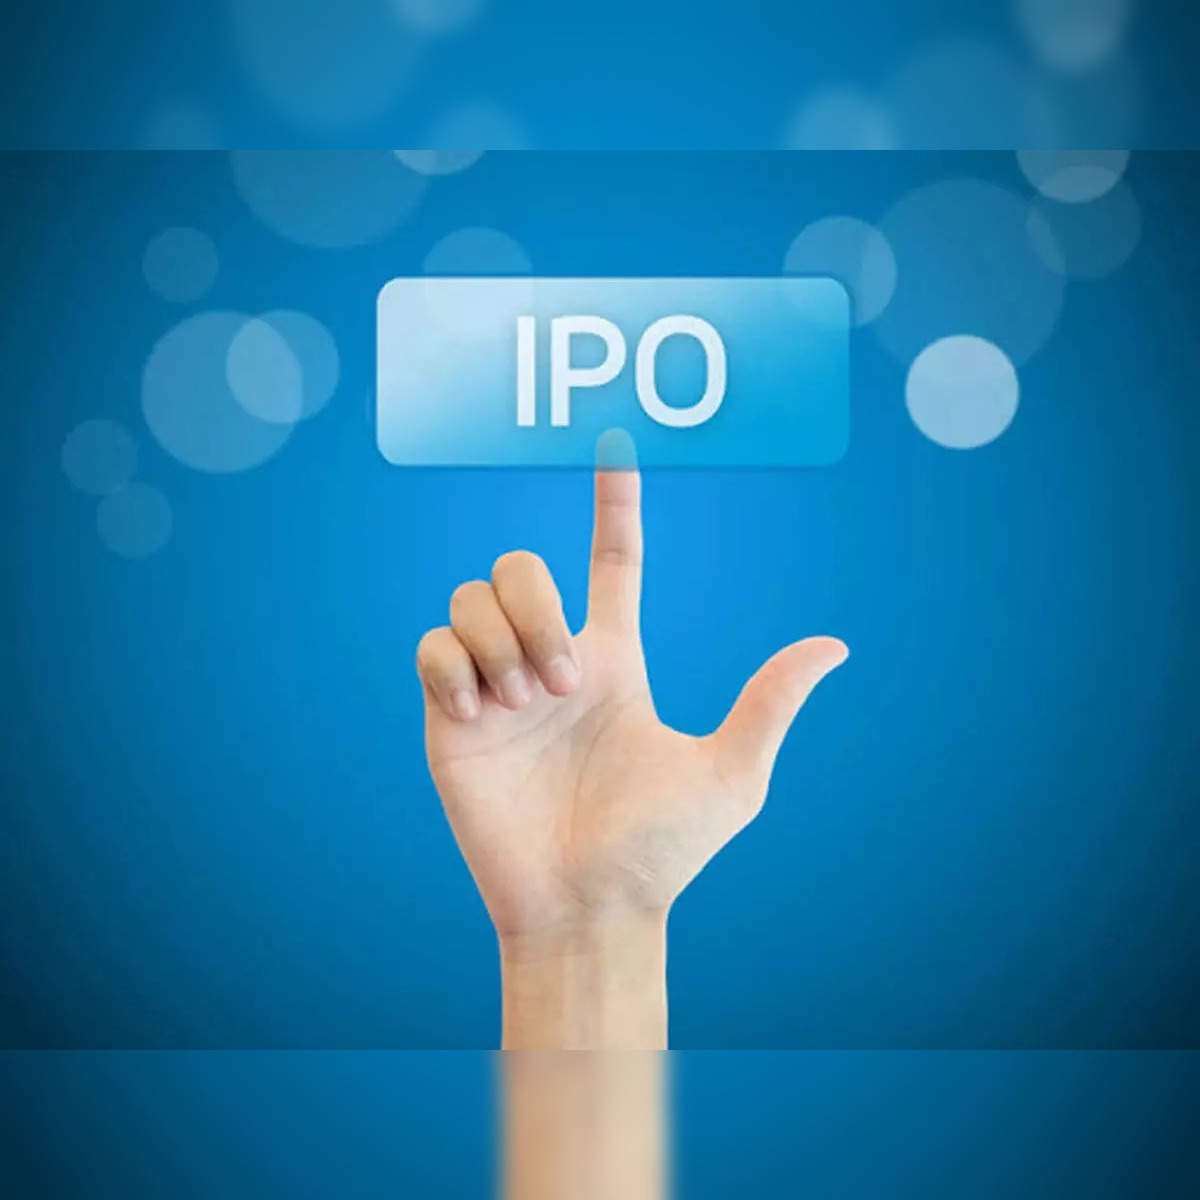 Medi Assist Healthcare stock lists at 11% premium to IPO price